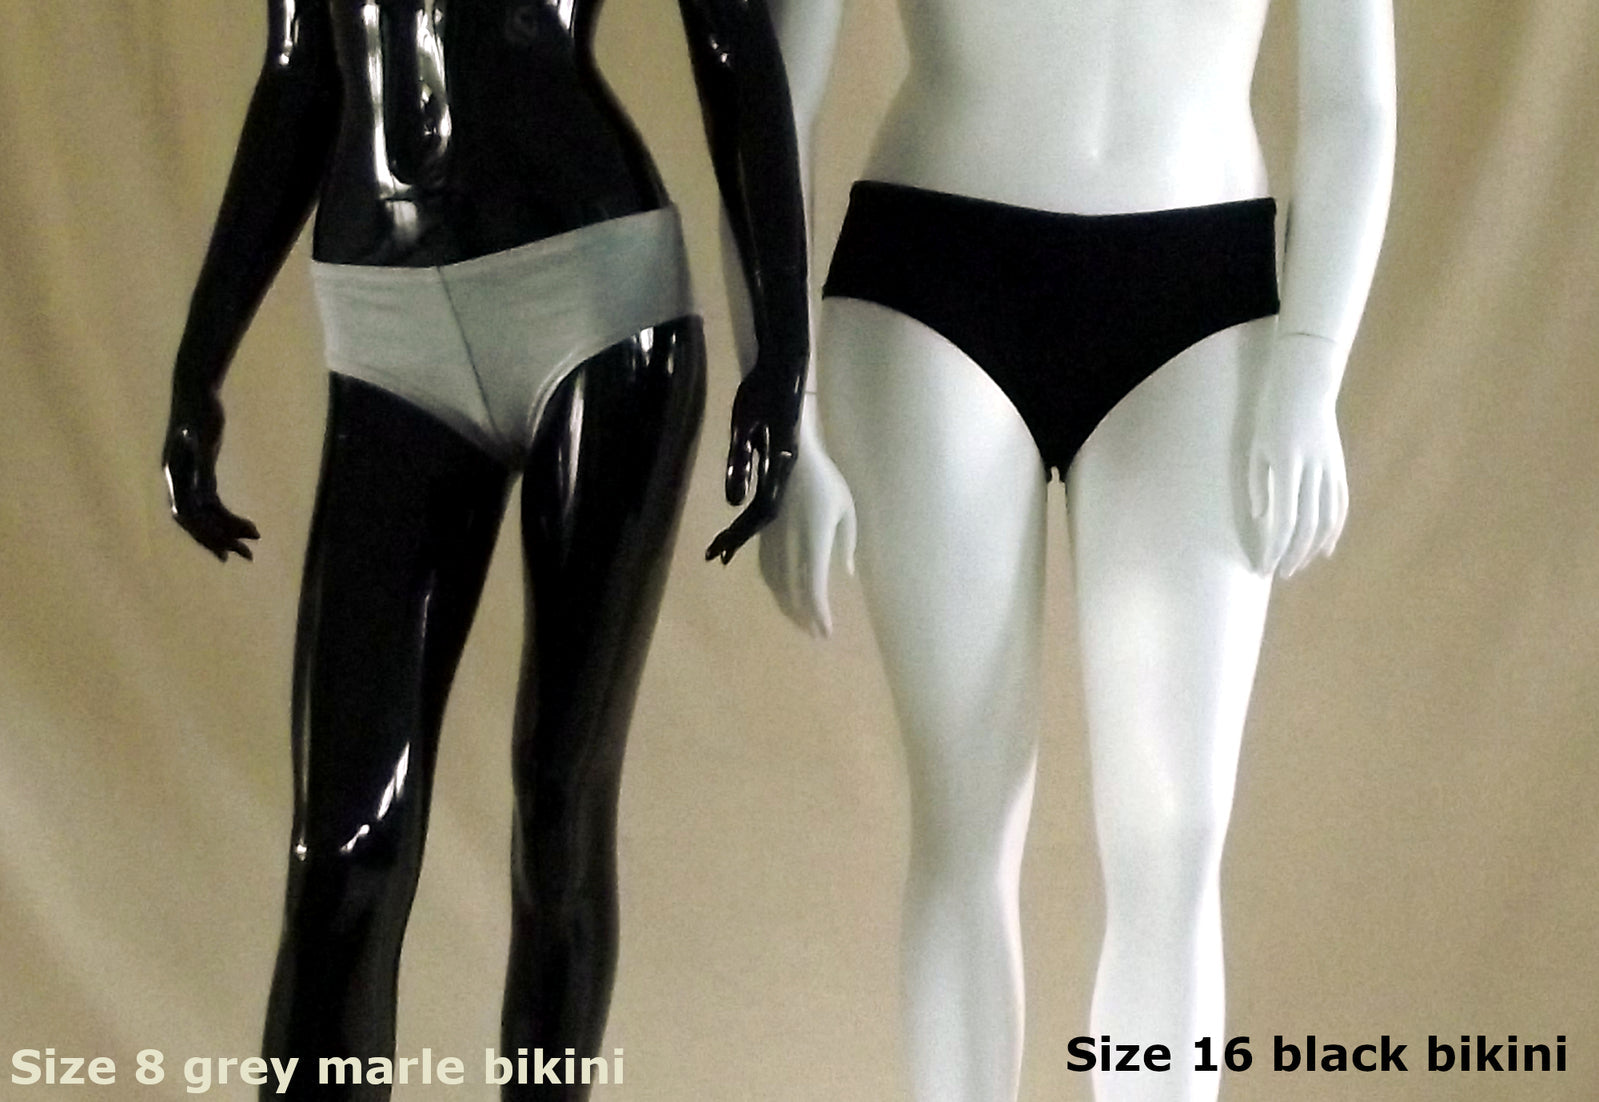 grey marle womens bikini briefs and black bikini briefs 